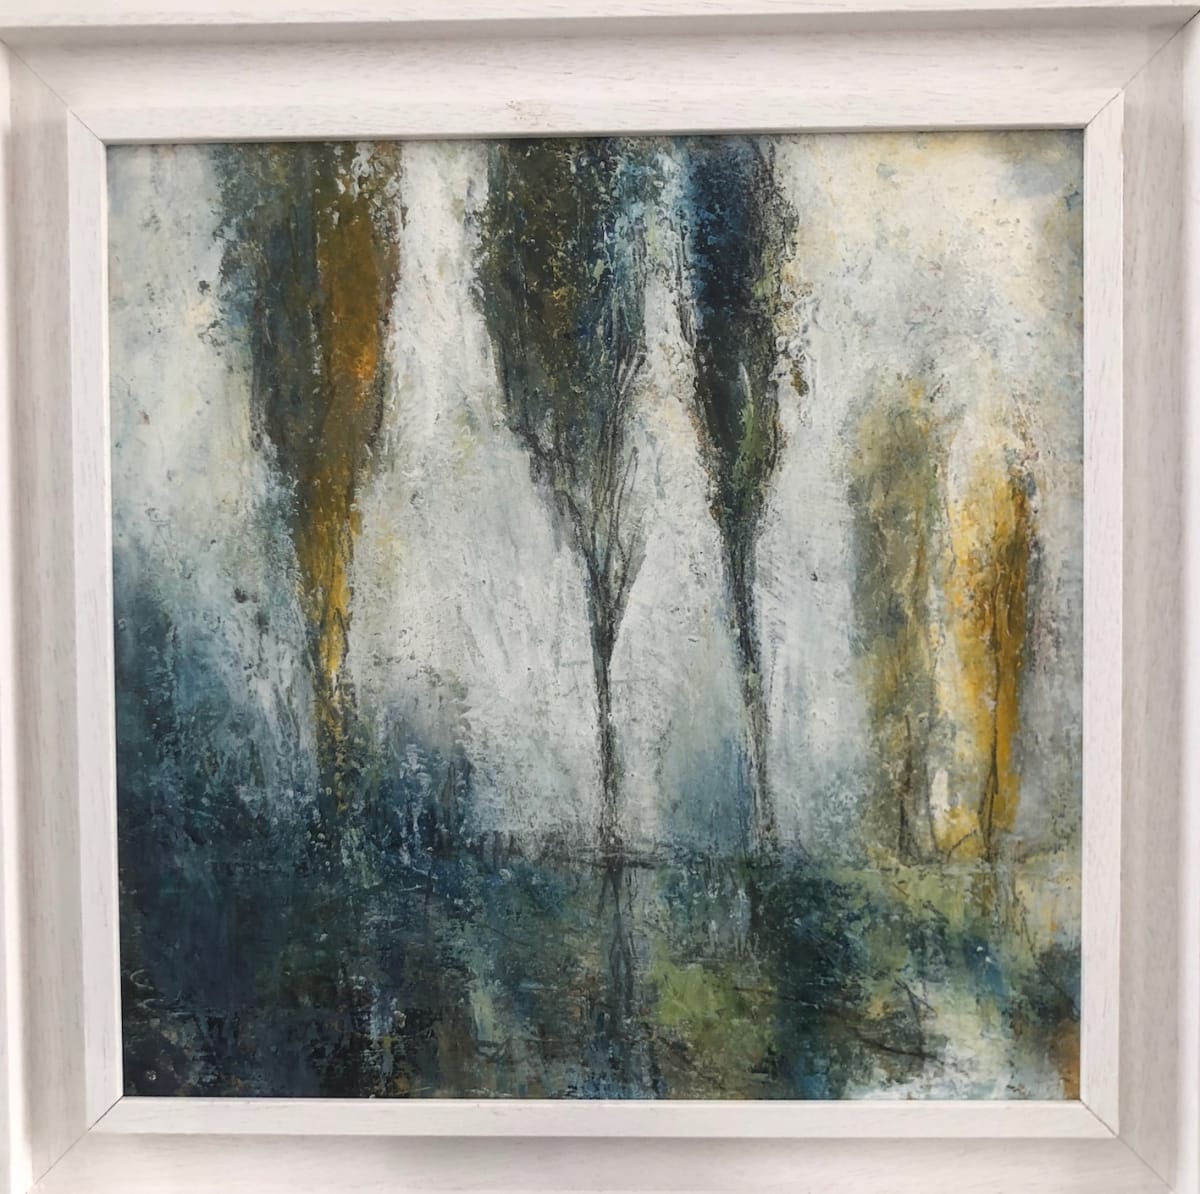 Three Trees Lake by Karen Blacklock  Image: Framed painting